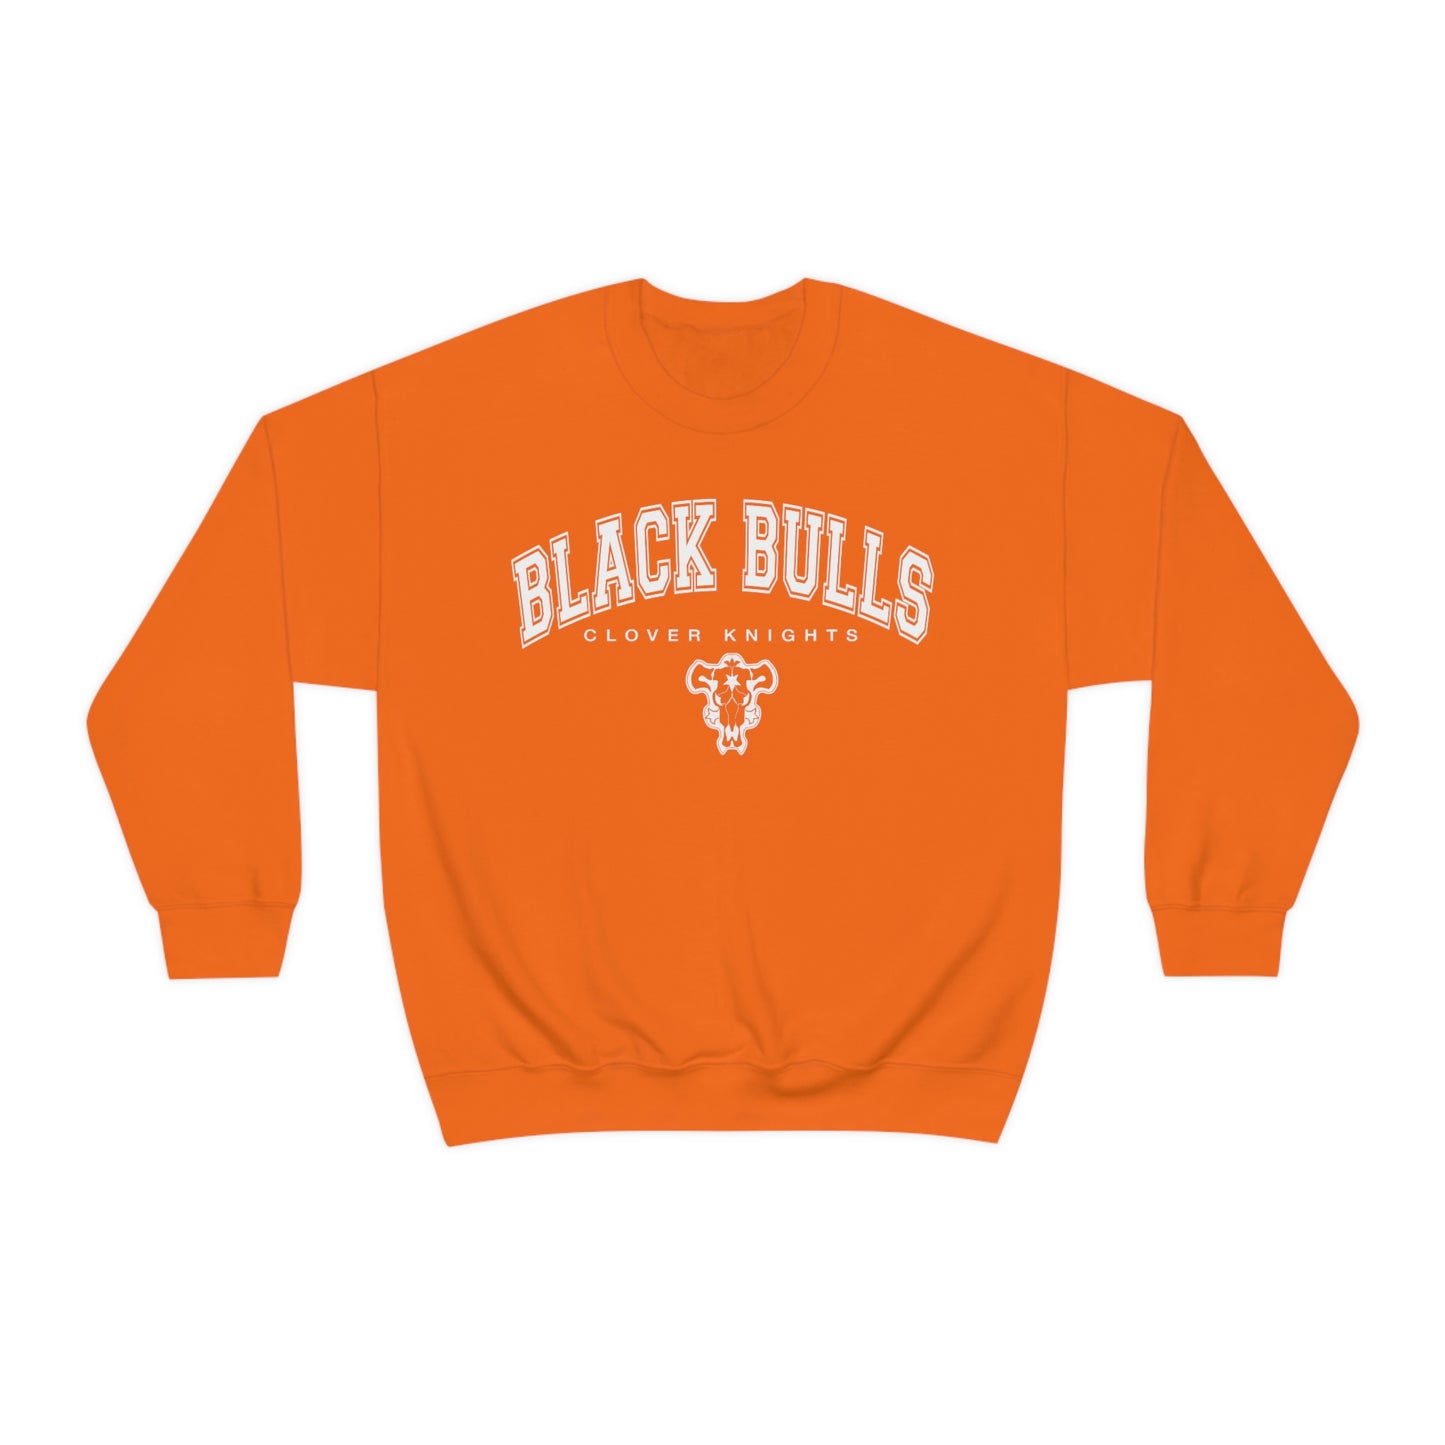 Black bull squad sweatshirt